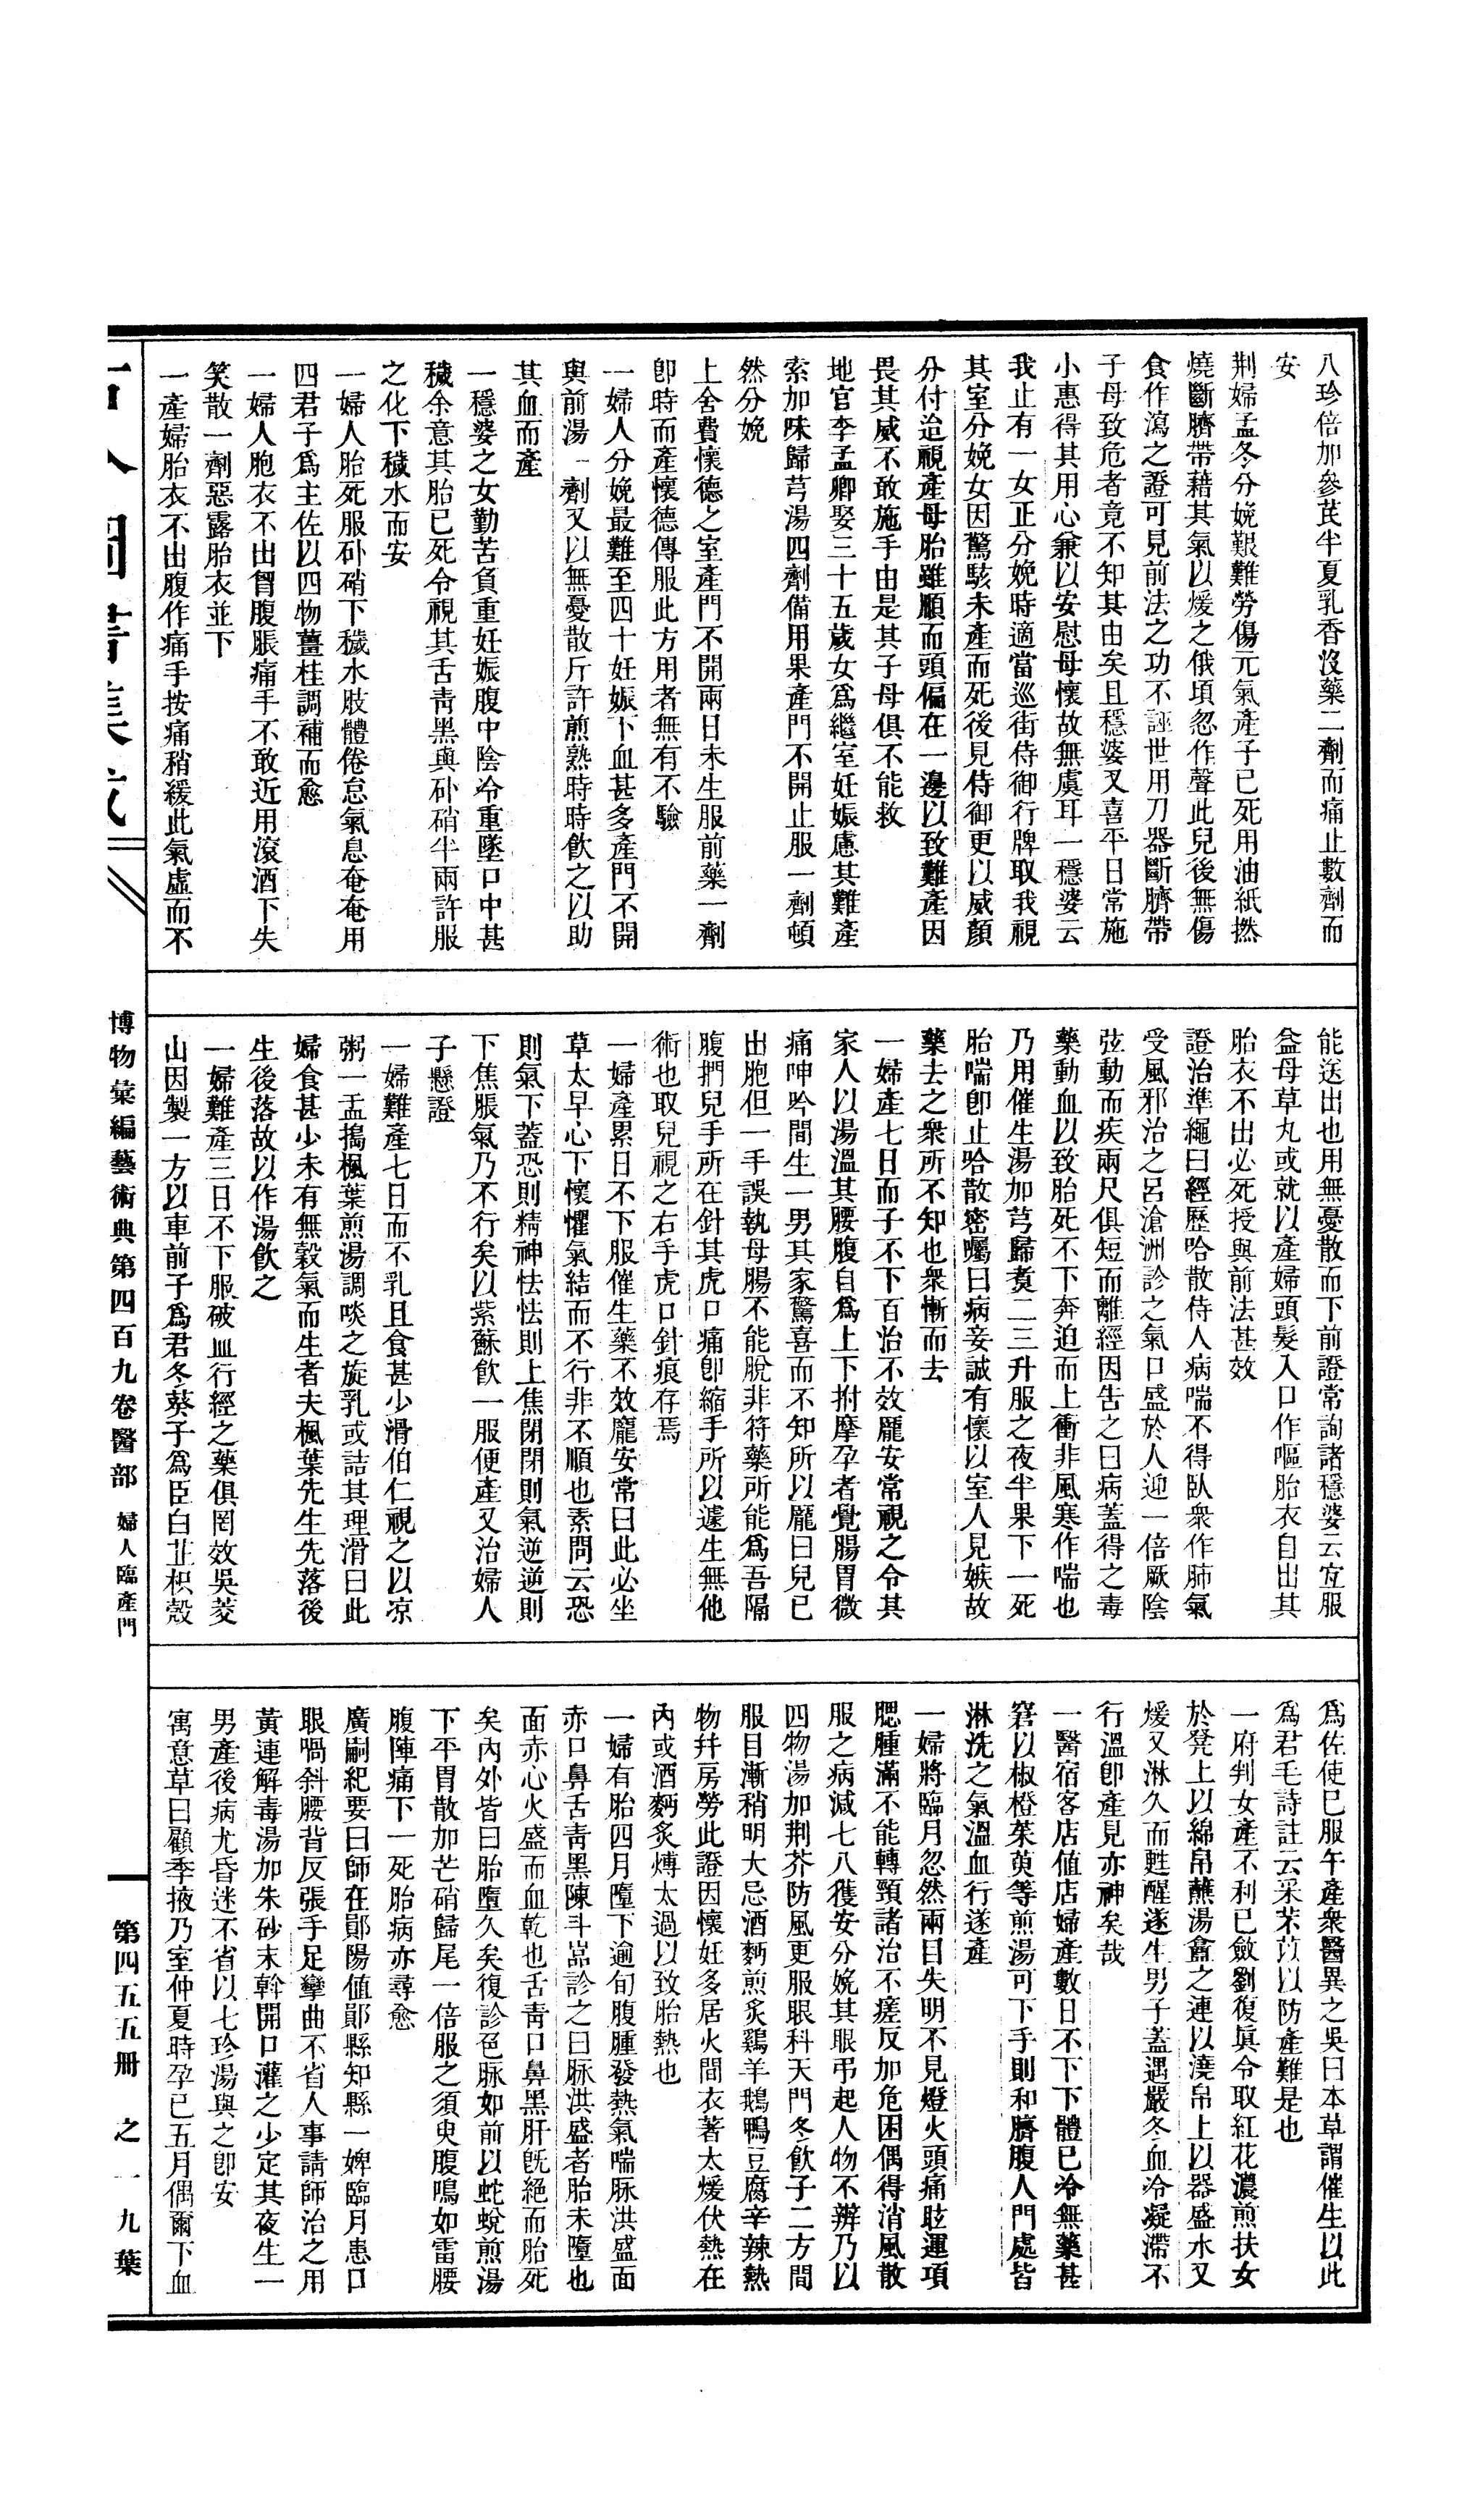 Page Gujin Tushu Jicheng Volume 455 1700 1725 Djvu 38 维基文库 自由的图书馆